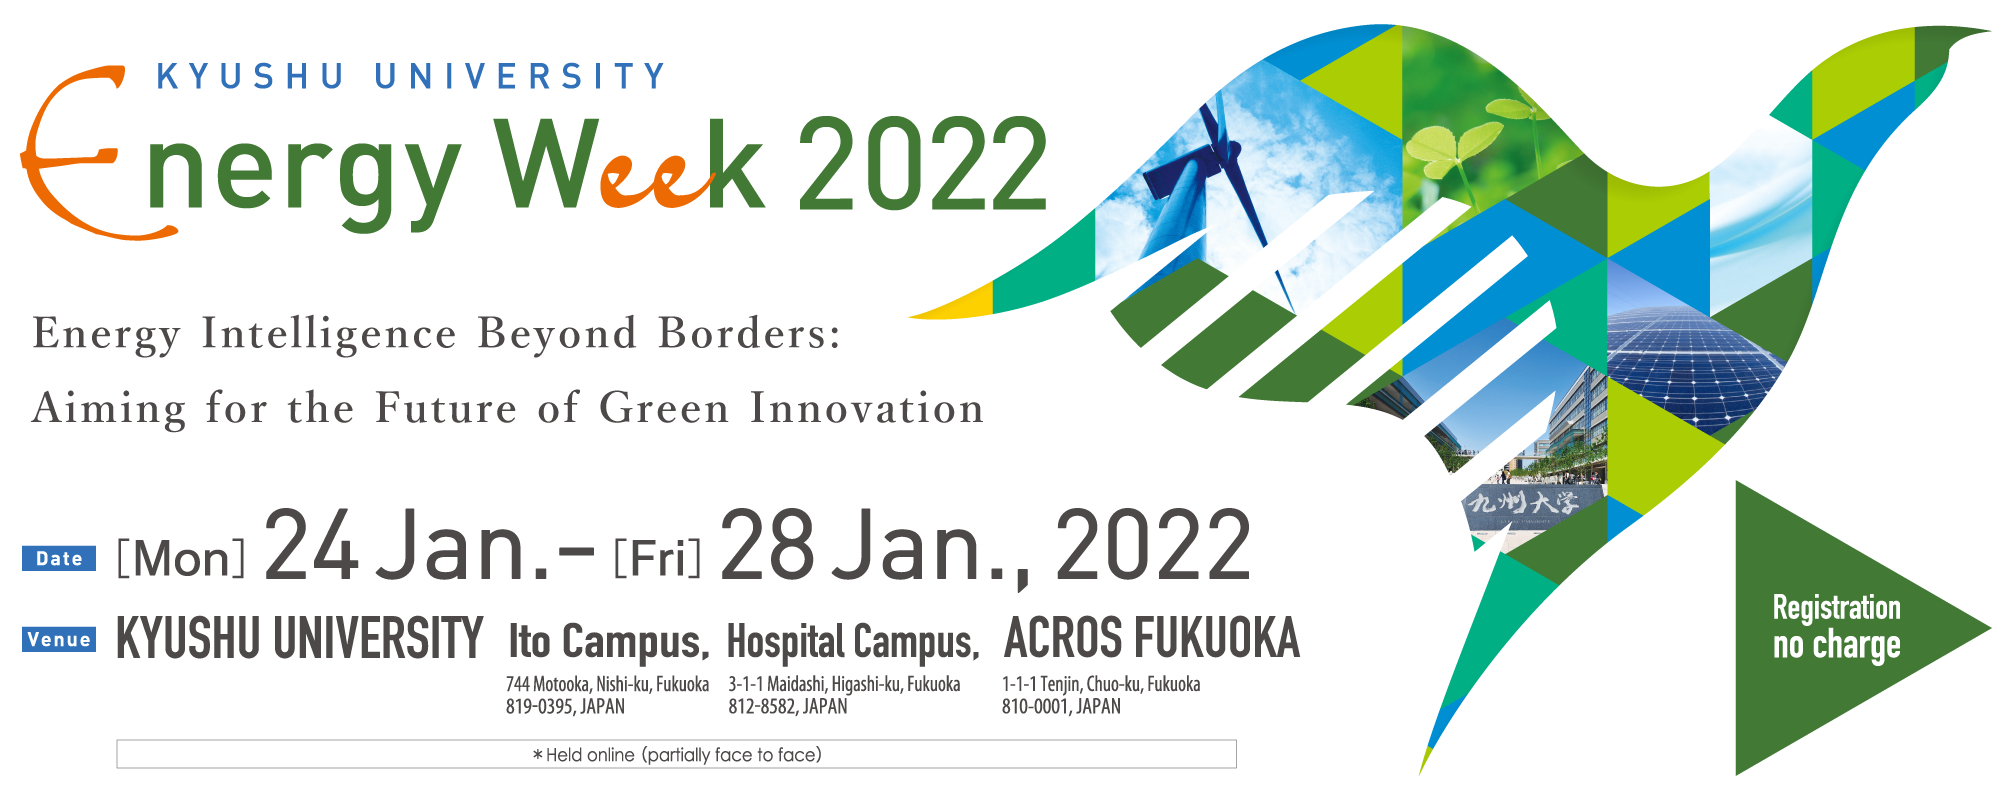 Kyushu University Energy Week 2022